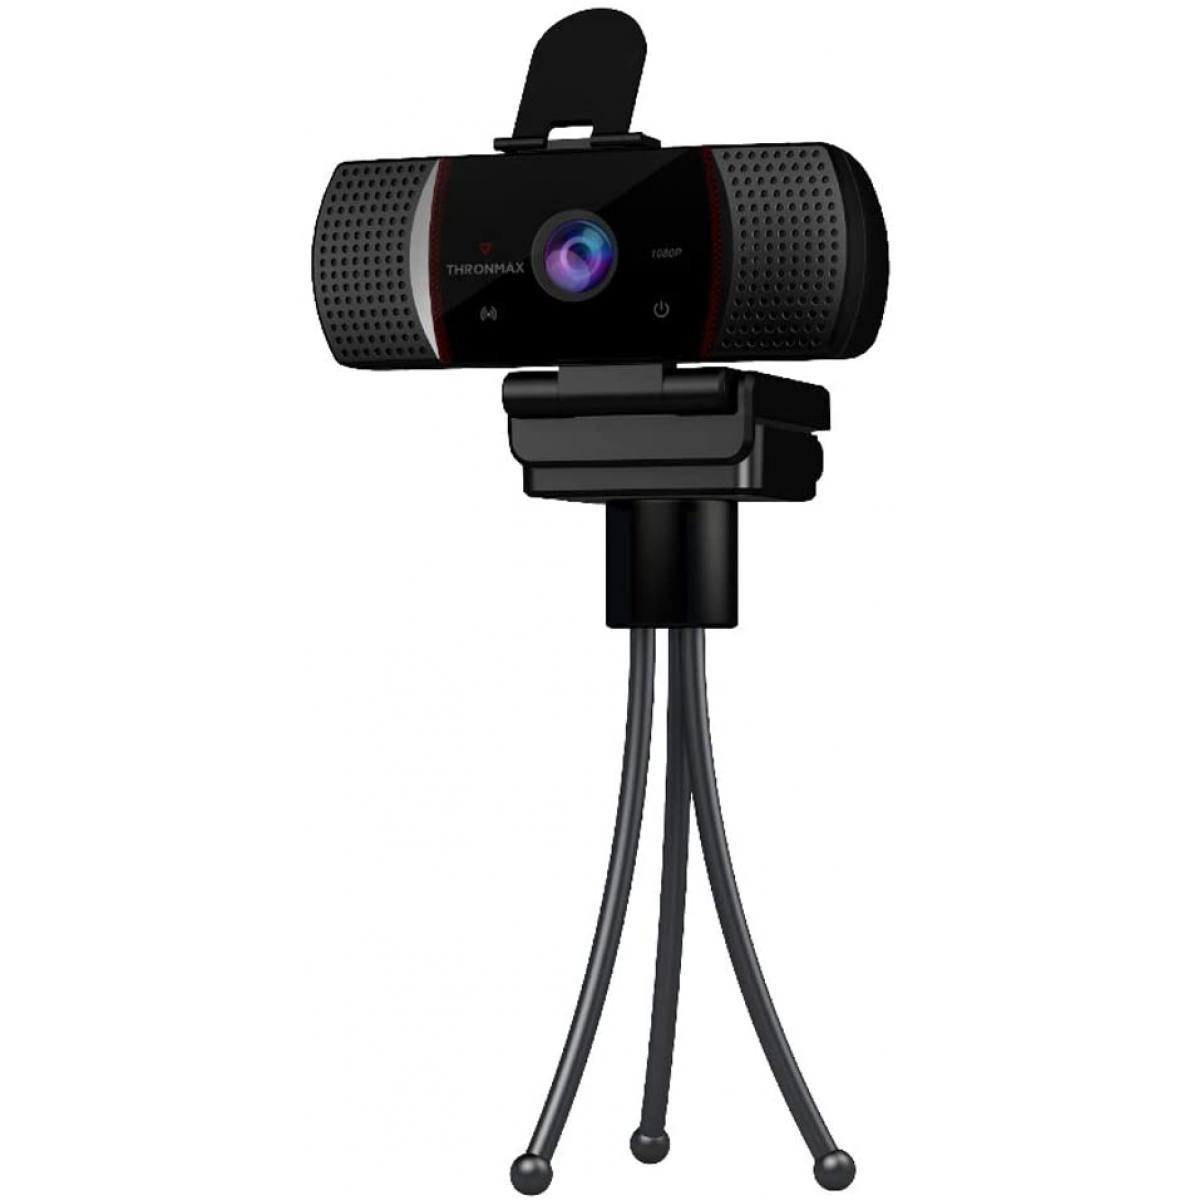 Thronmax X1 Stream Go 1080p Full HD Webcam